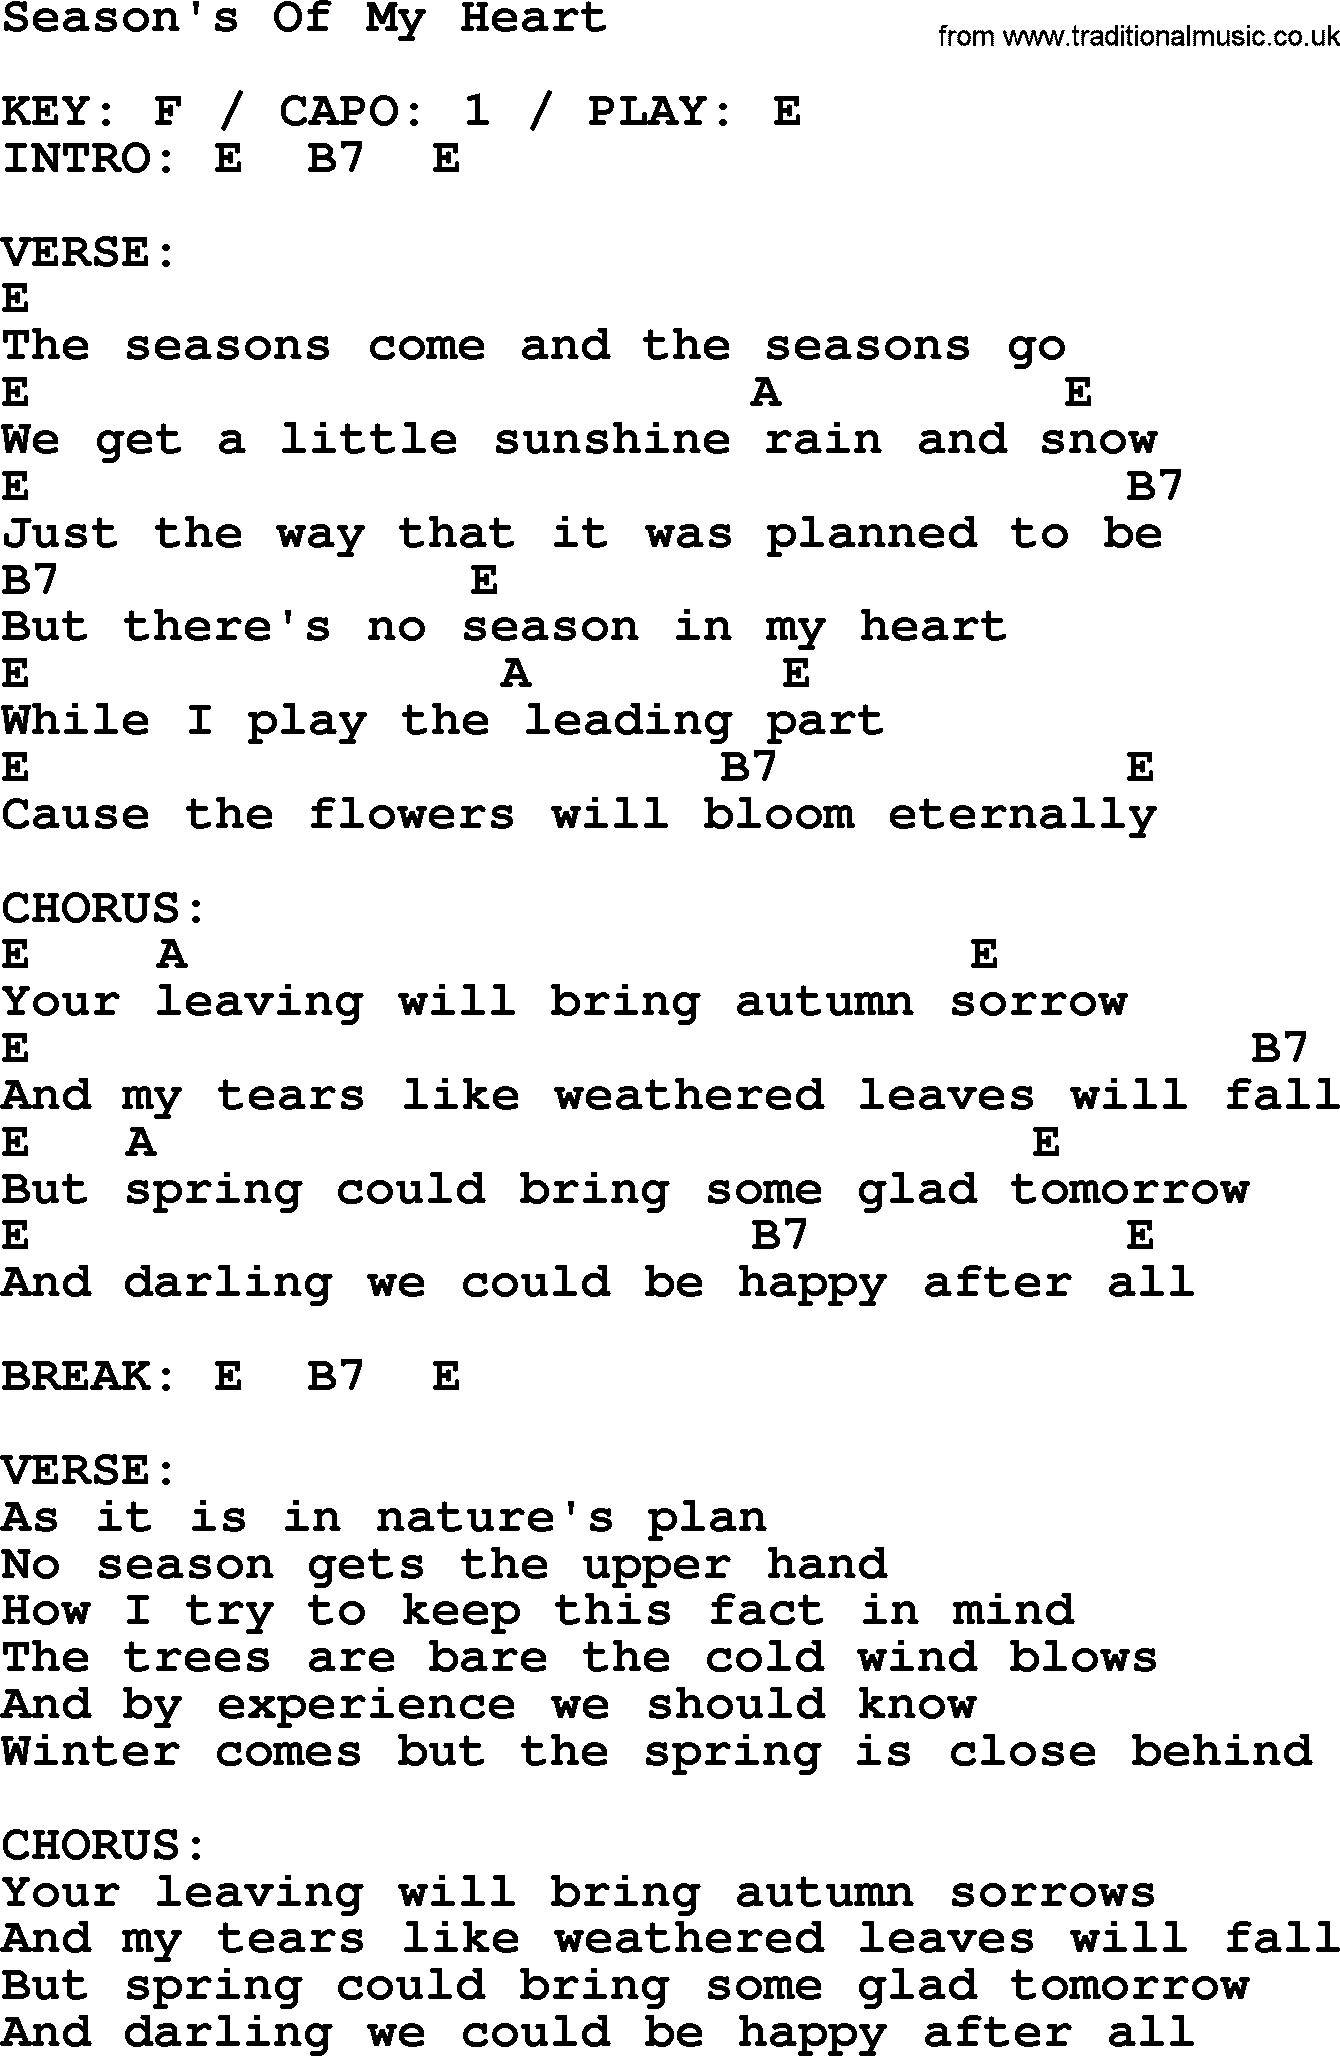 Johnny Cash song Season's Of My Heart, lyrics and chords